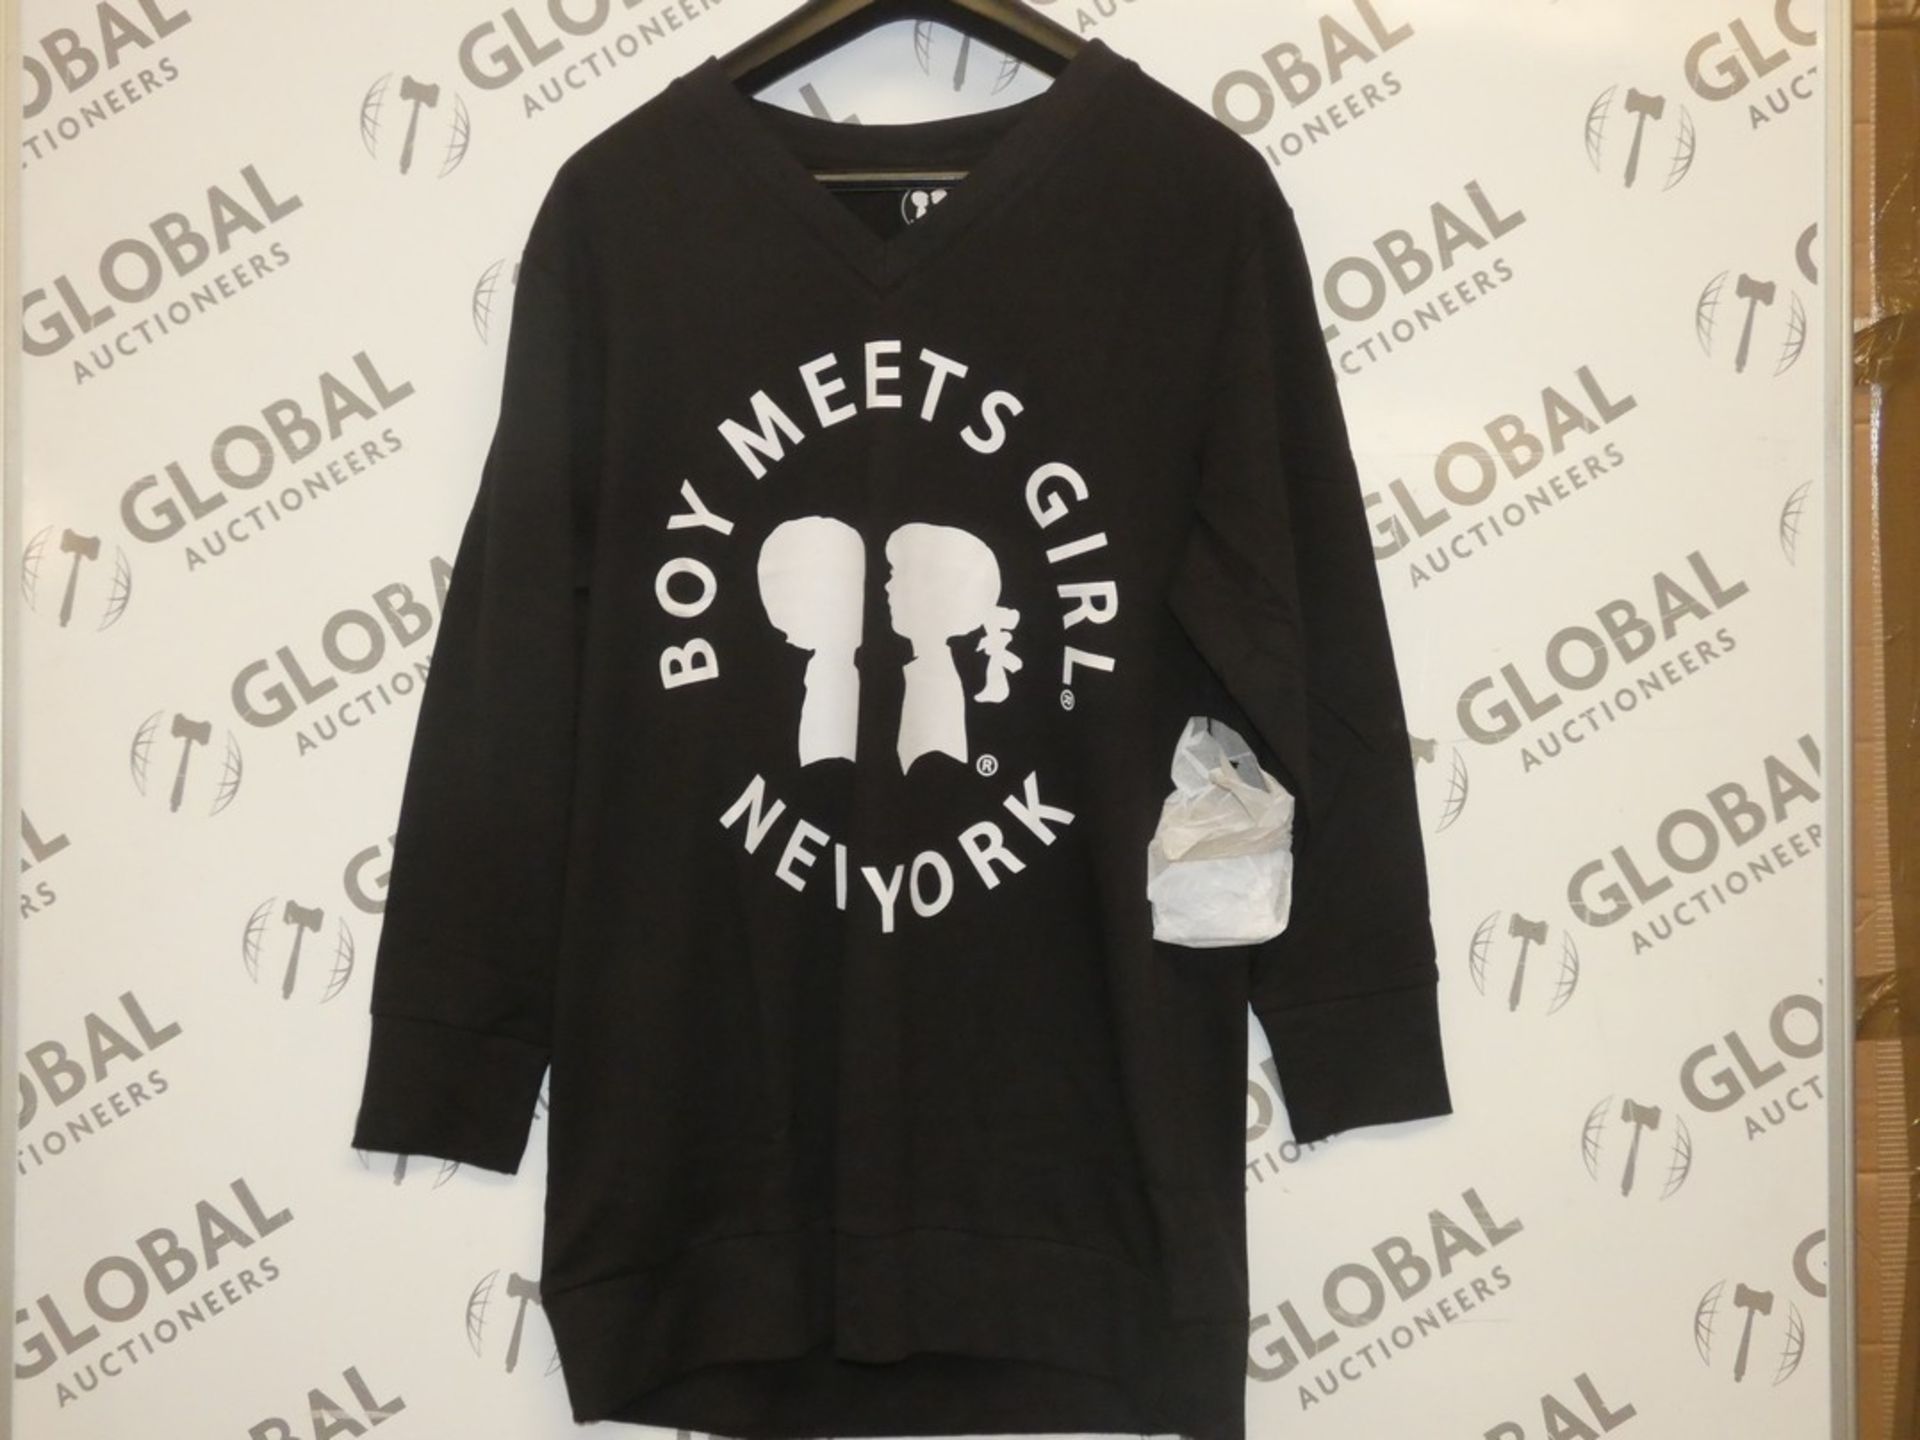 Bagged Brand New Boy Meets Girl Size XS Black V Neck Sweatshirts RRP £39.99